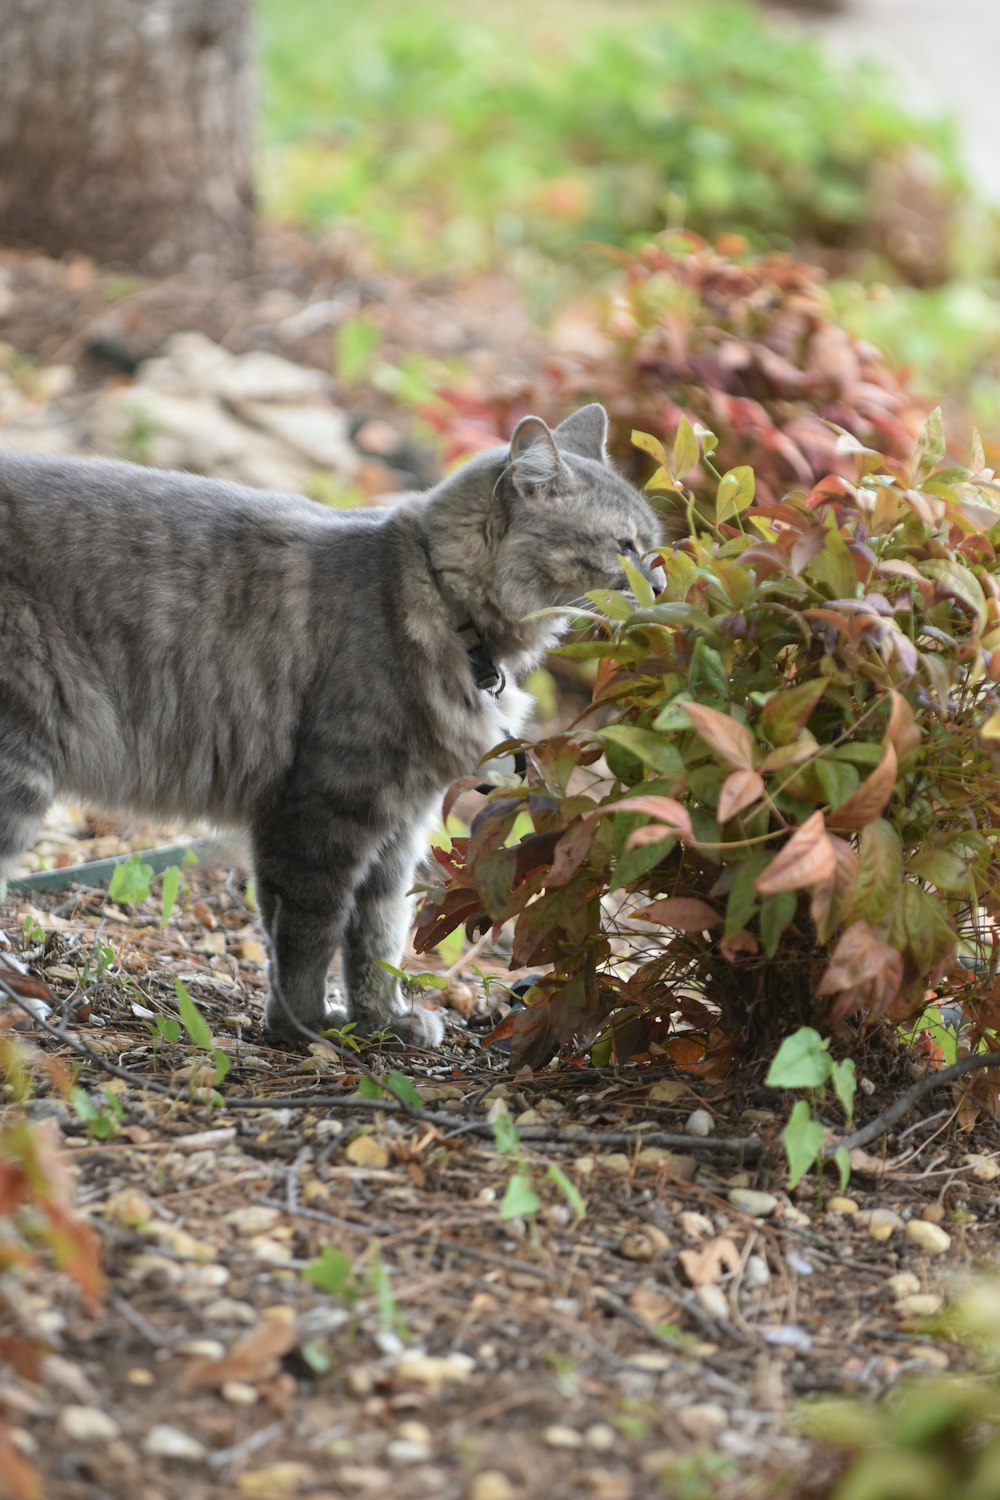 a cat standing in the dirt near a bush